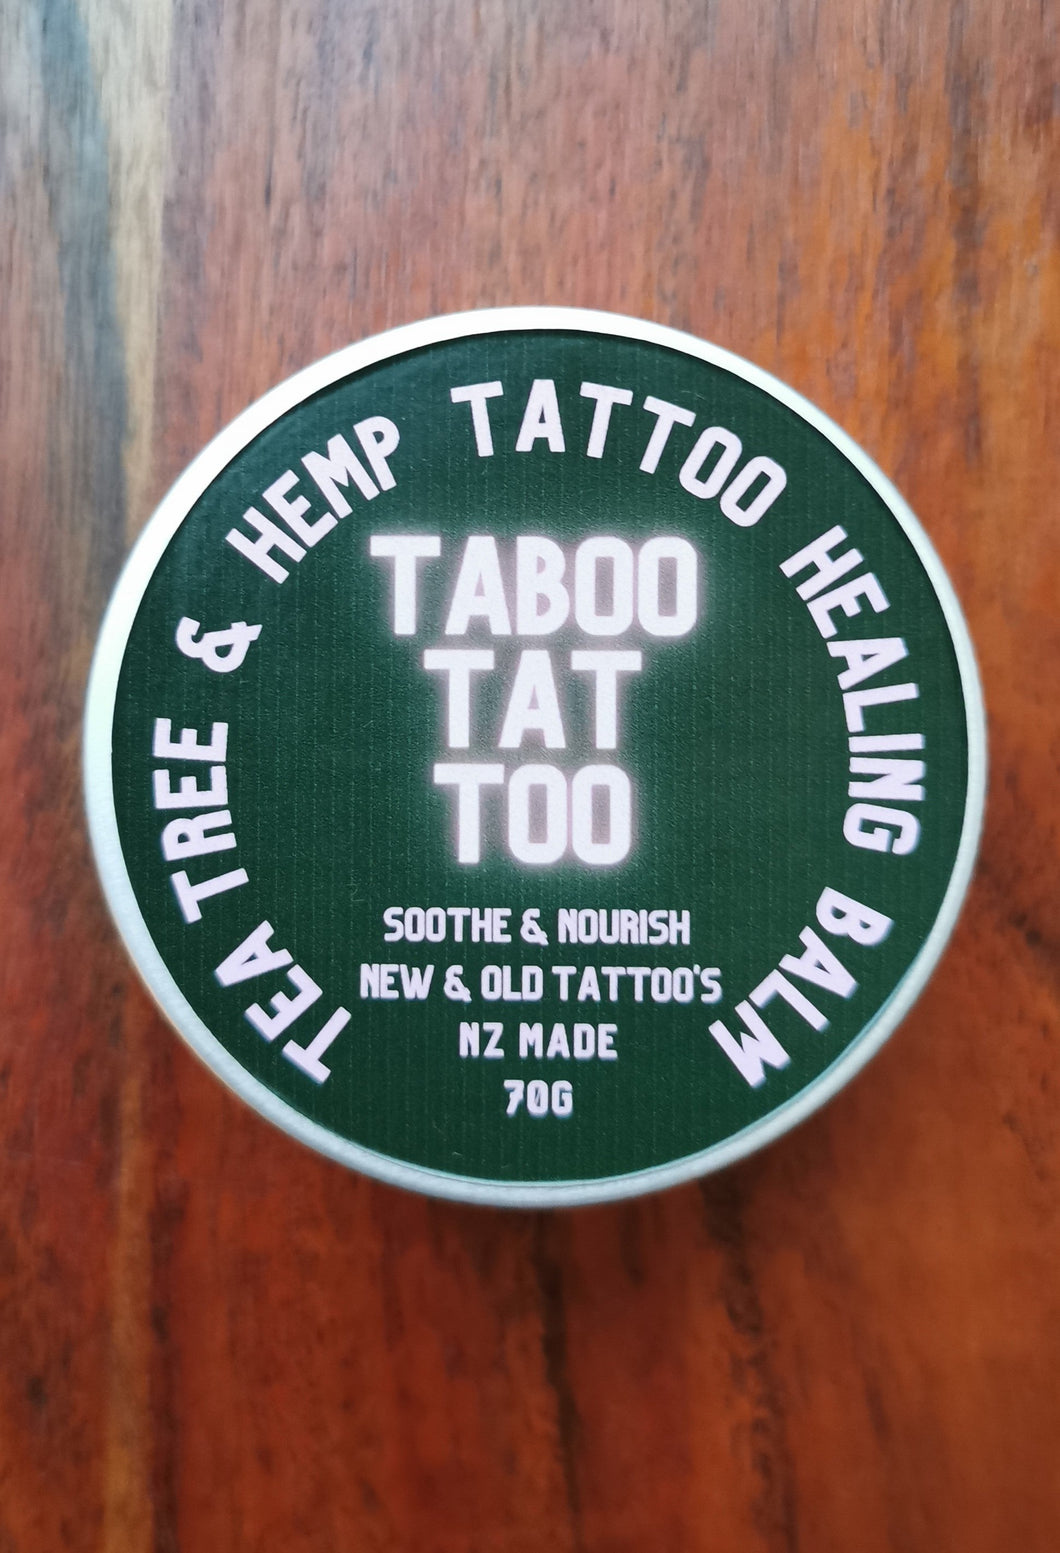 SALE!! TABOO TATTOO TEA TREE & HEMP HEALING BALM in SMALL WAS $14.95 Now $8